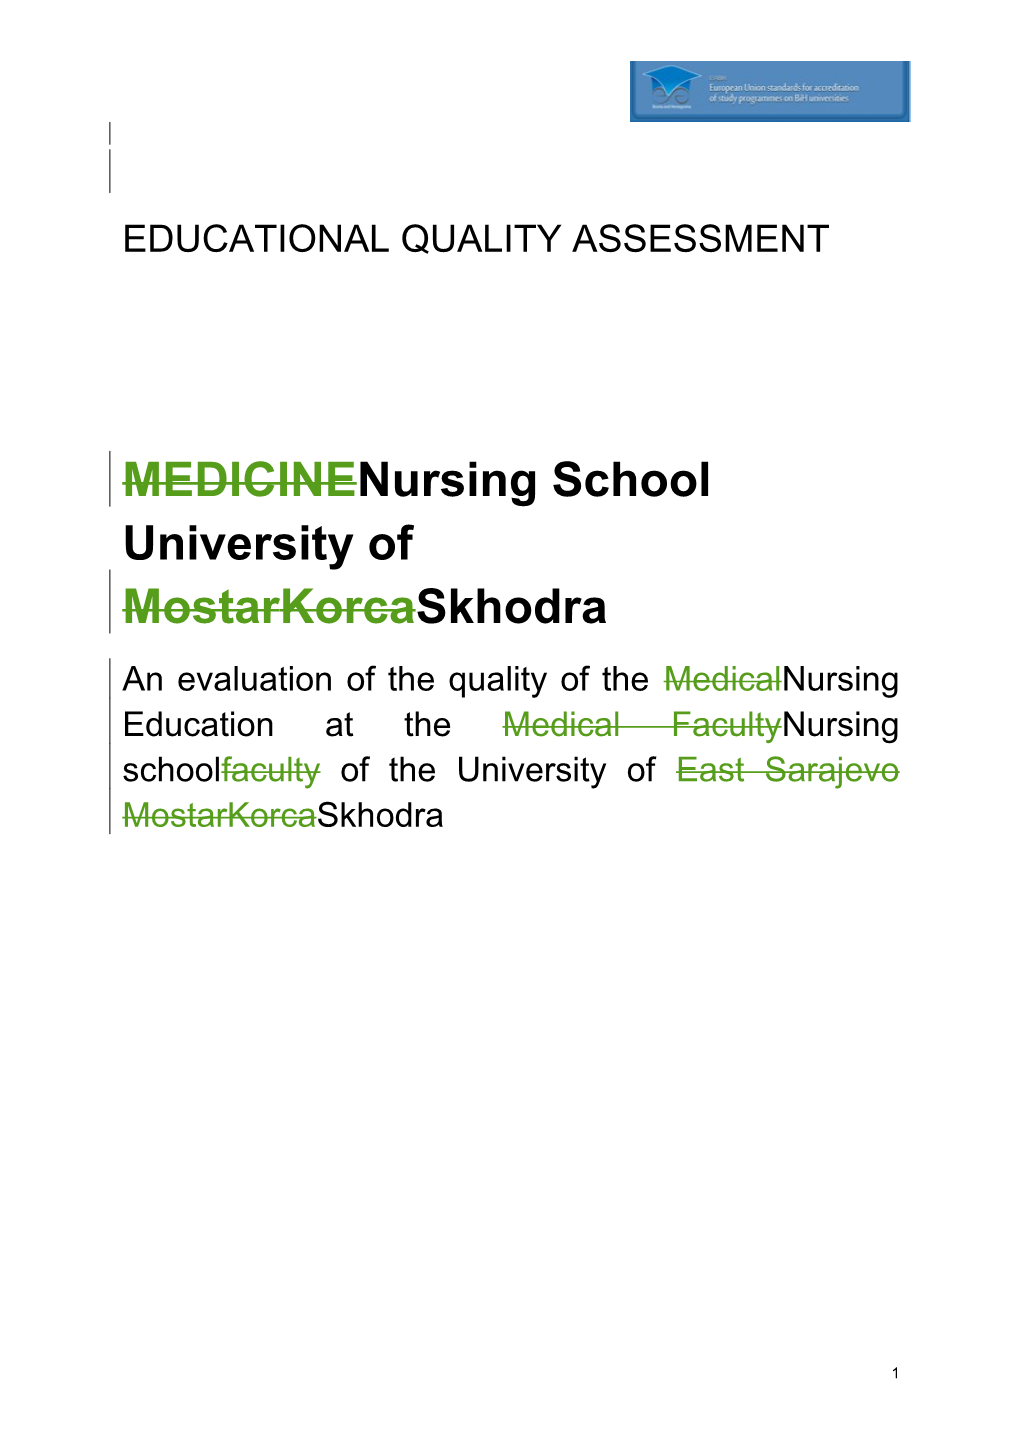 MEDICINE Nursing School University of Mostarkorcaskhodra